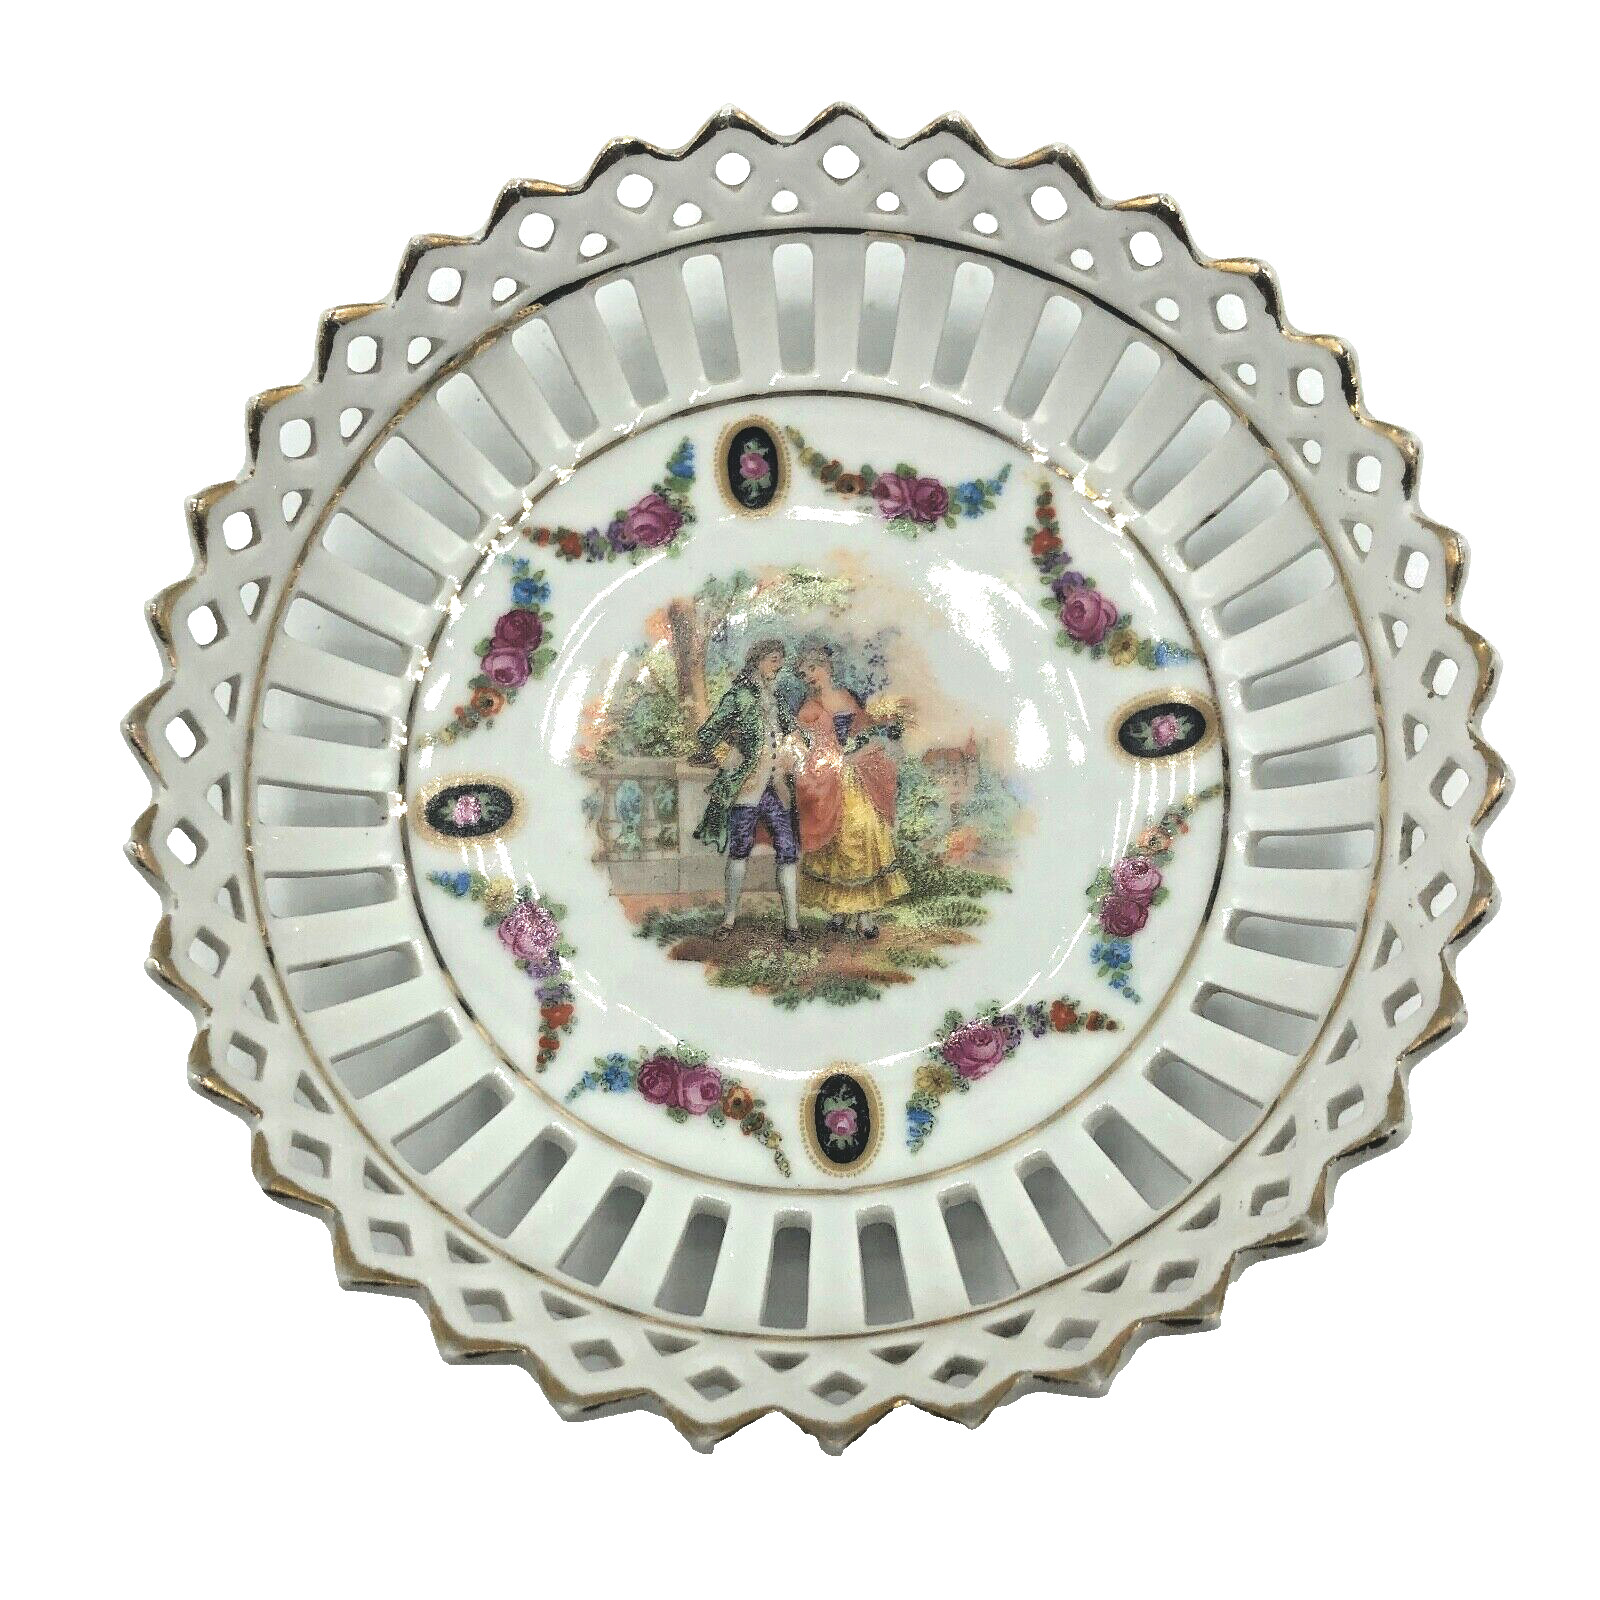 Vintage German Trinket Bowls Dish Reticulated Provincial Man Woman Flower Border